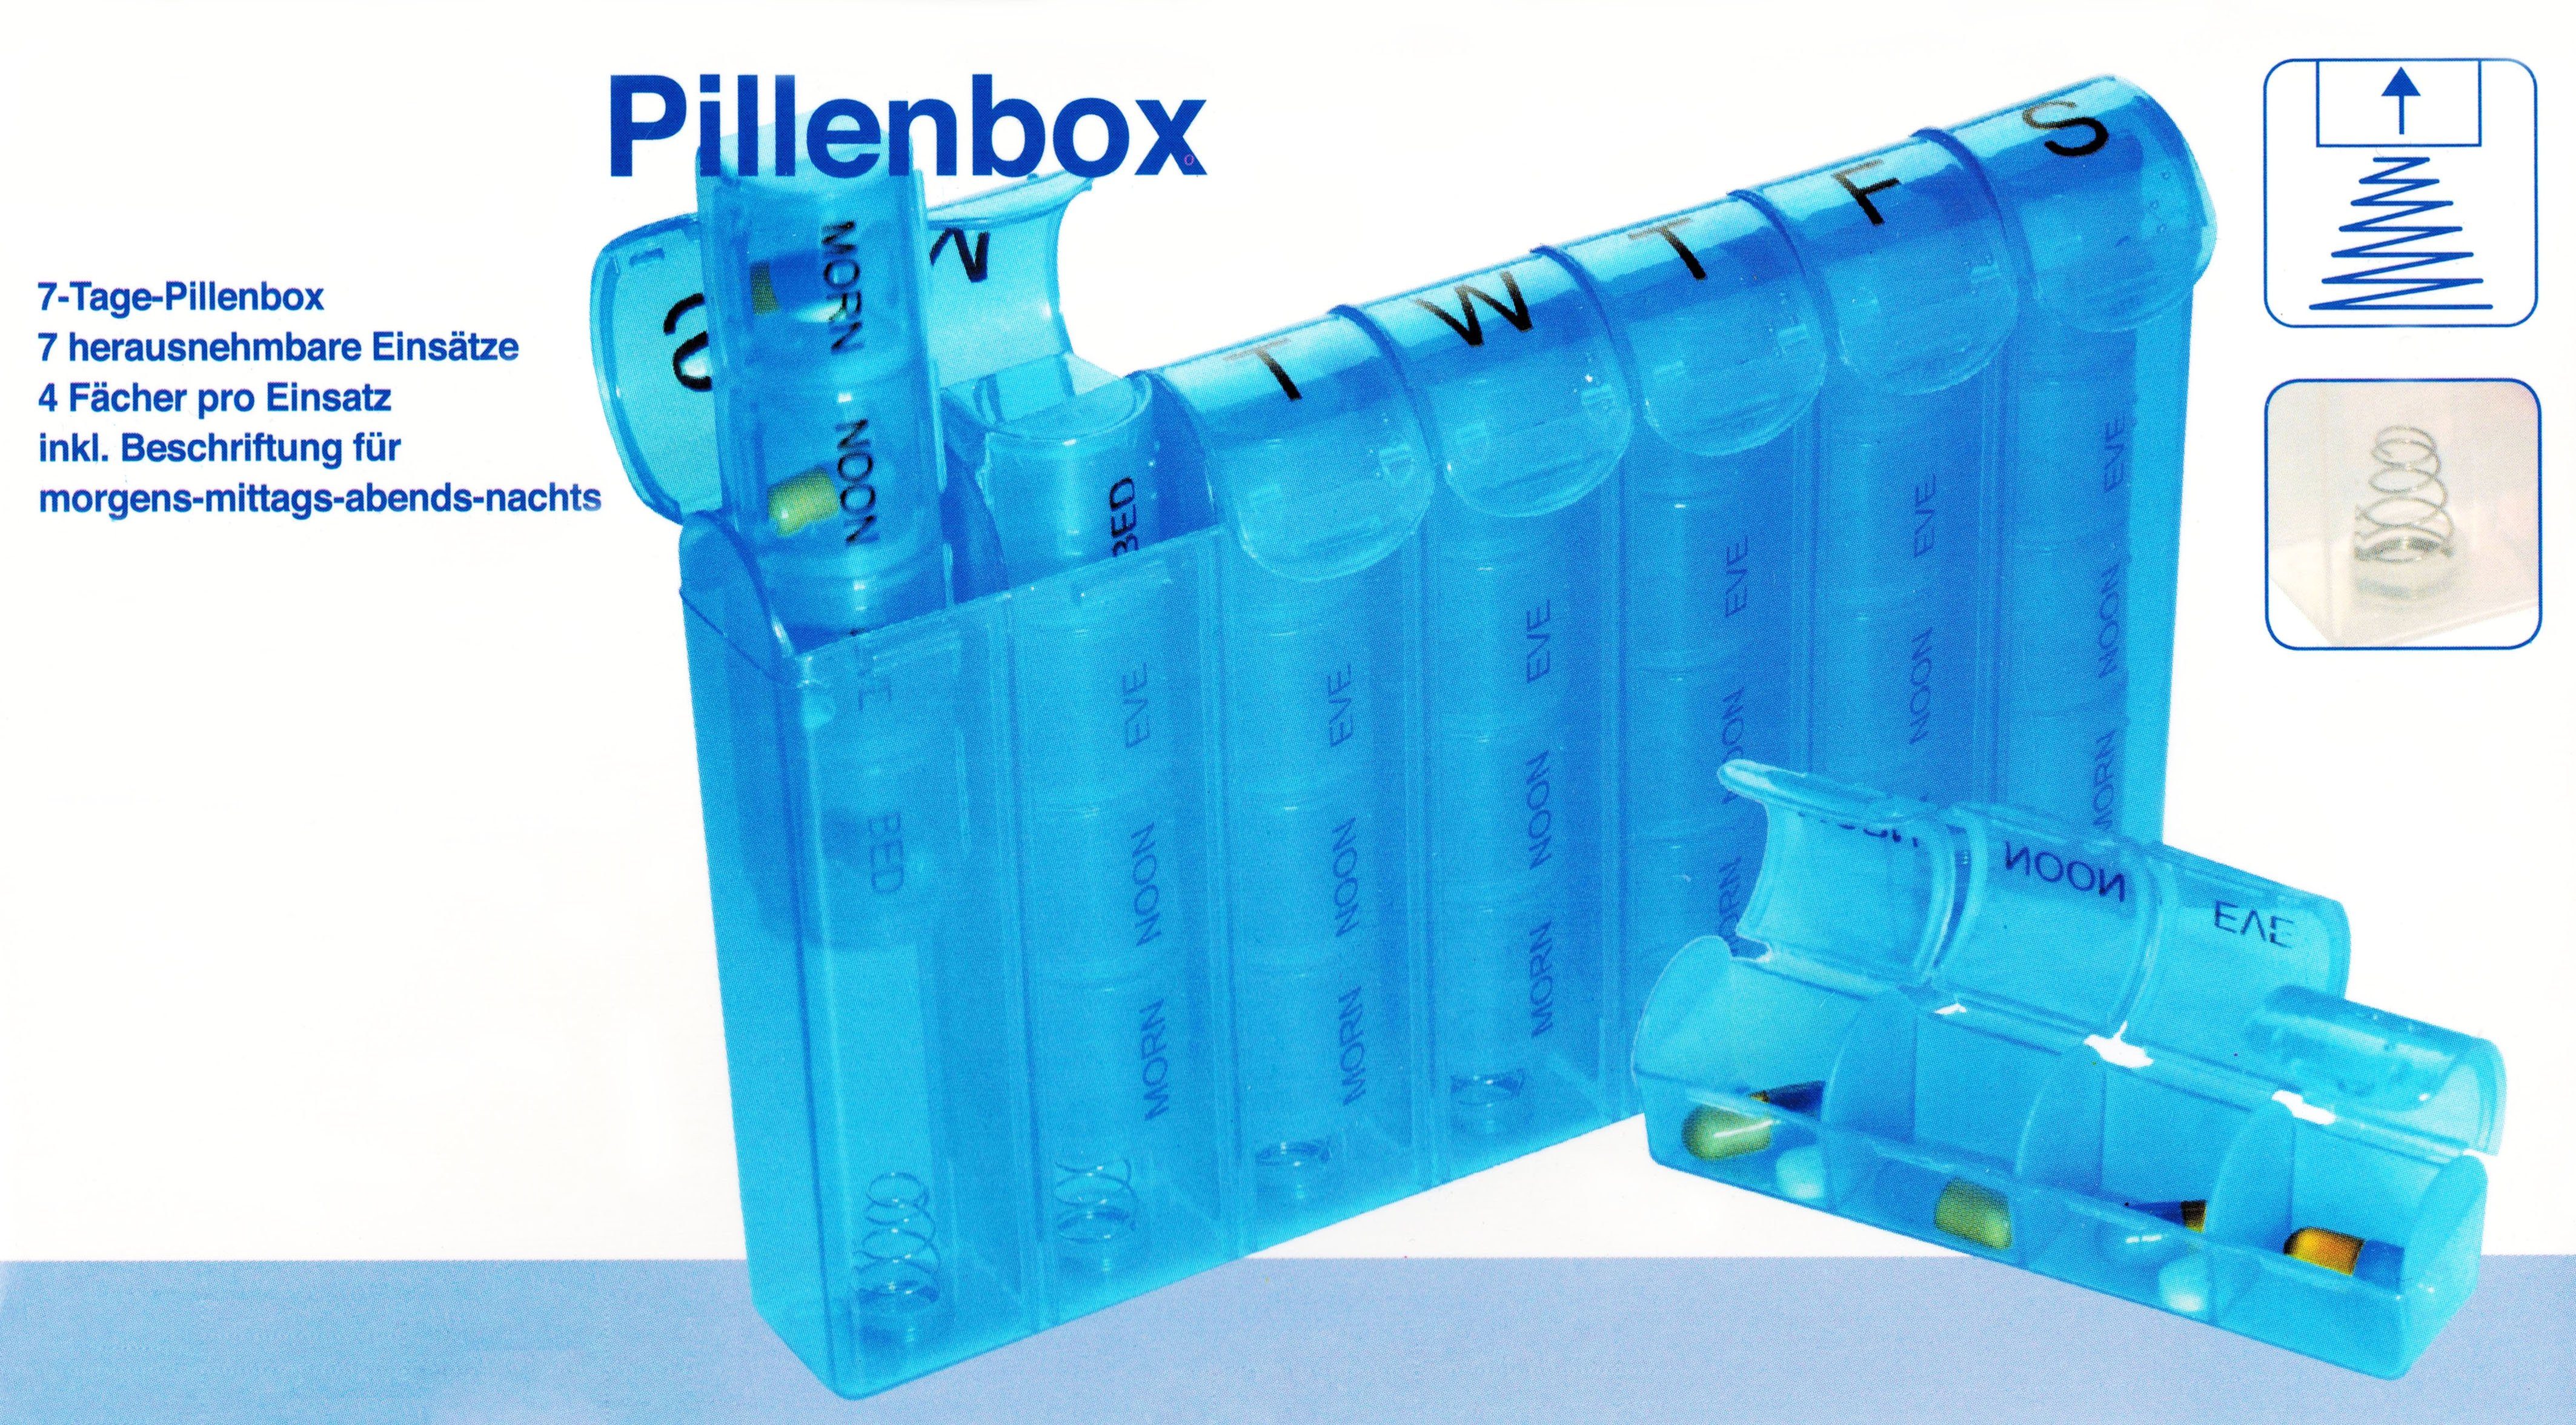 COMFORT AID Pillendose 7 Tage PILLENBOX Pillendose Tablettenbox  Medikamentenbox Pillen Dose Box 95 (Blau)